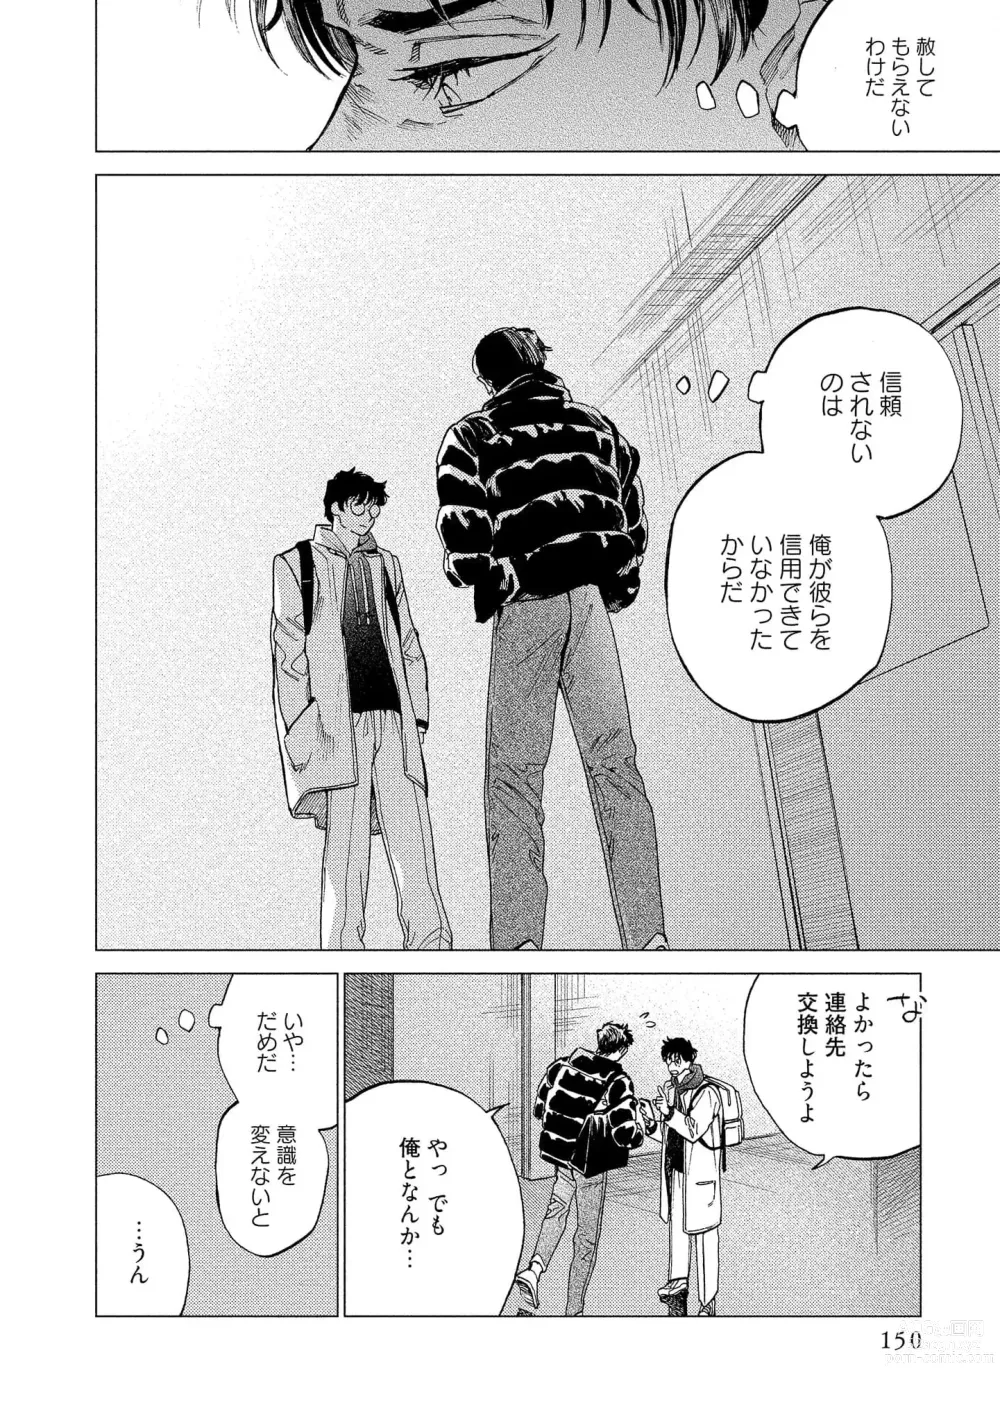 Page 152 of manga Fukushuu ga Tokenai